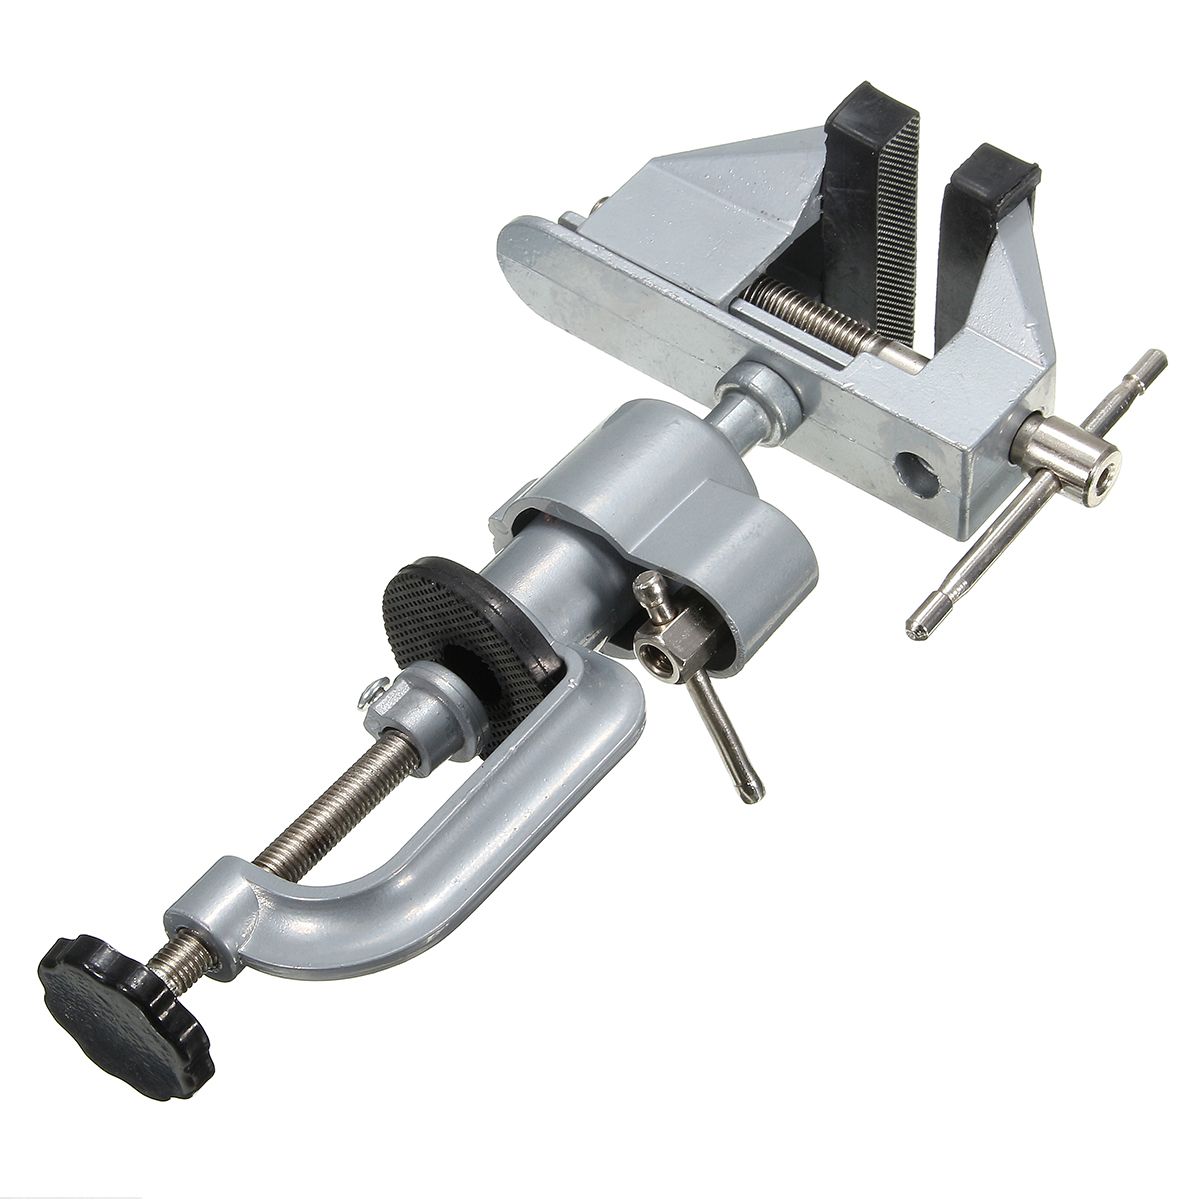 Vise-Workbench-Swivel-360deg-Rotating-Clamp-Table-Top-Deluxe-Craft-Repair-DIY-Tool-1121862